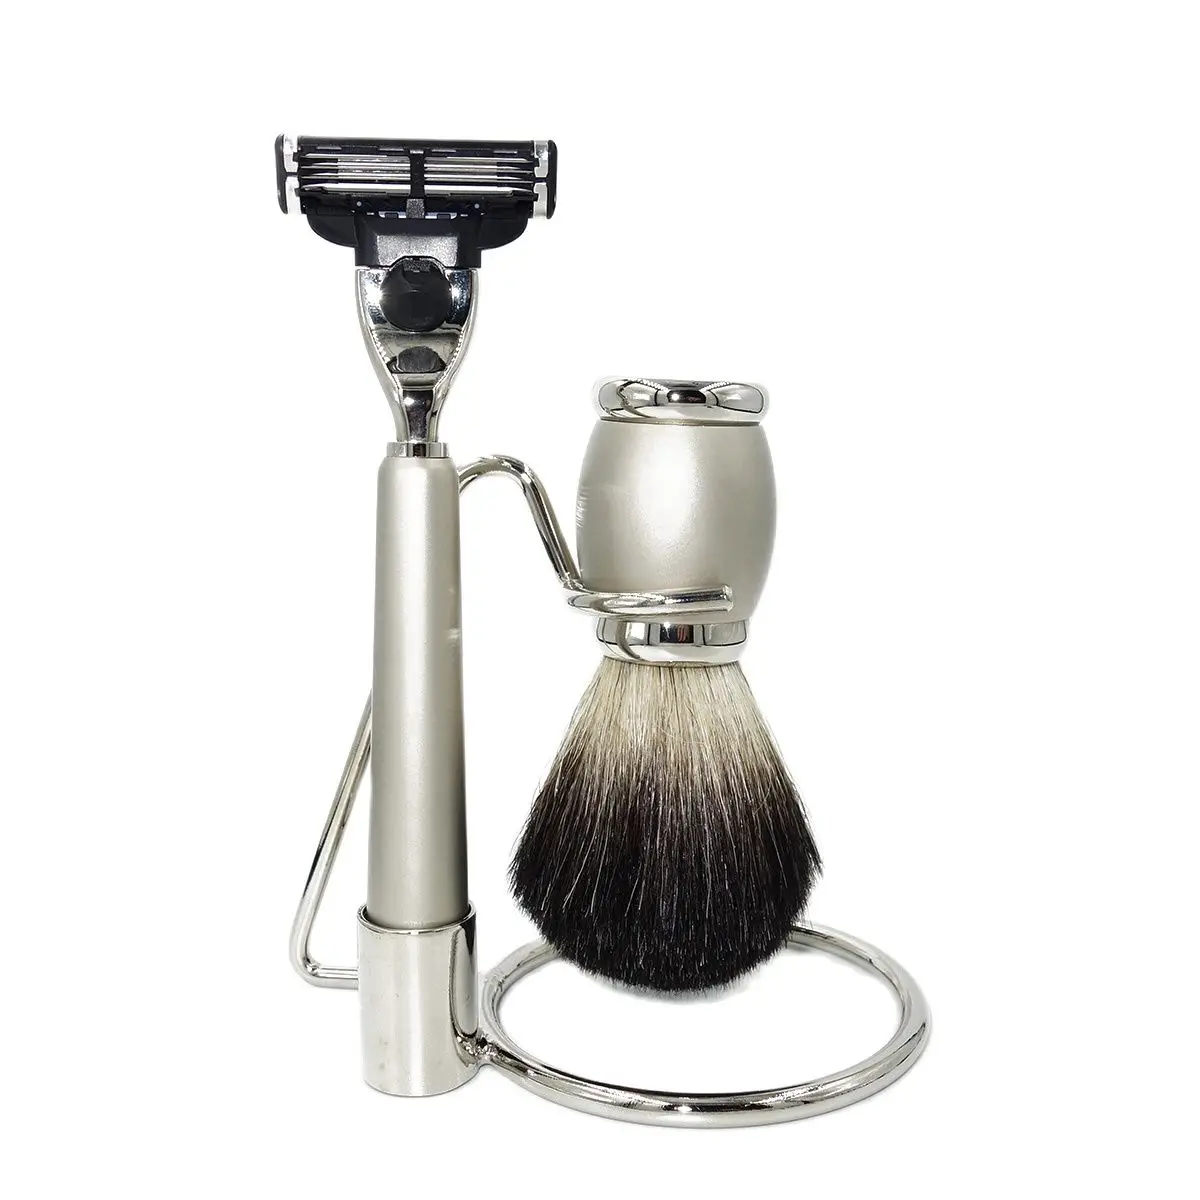 irazor-classic-barber-beard-m3-mach-3-razor-kit-black-badger-brush-shaving-set-for-mens-grooming-tool-accessories